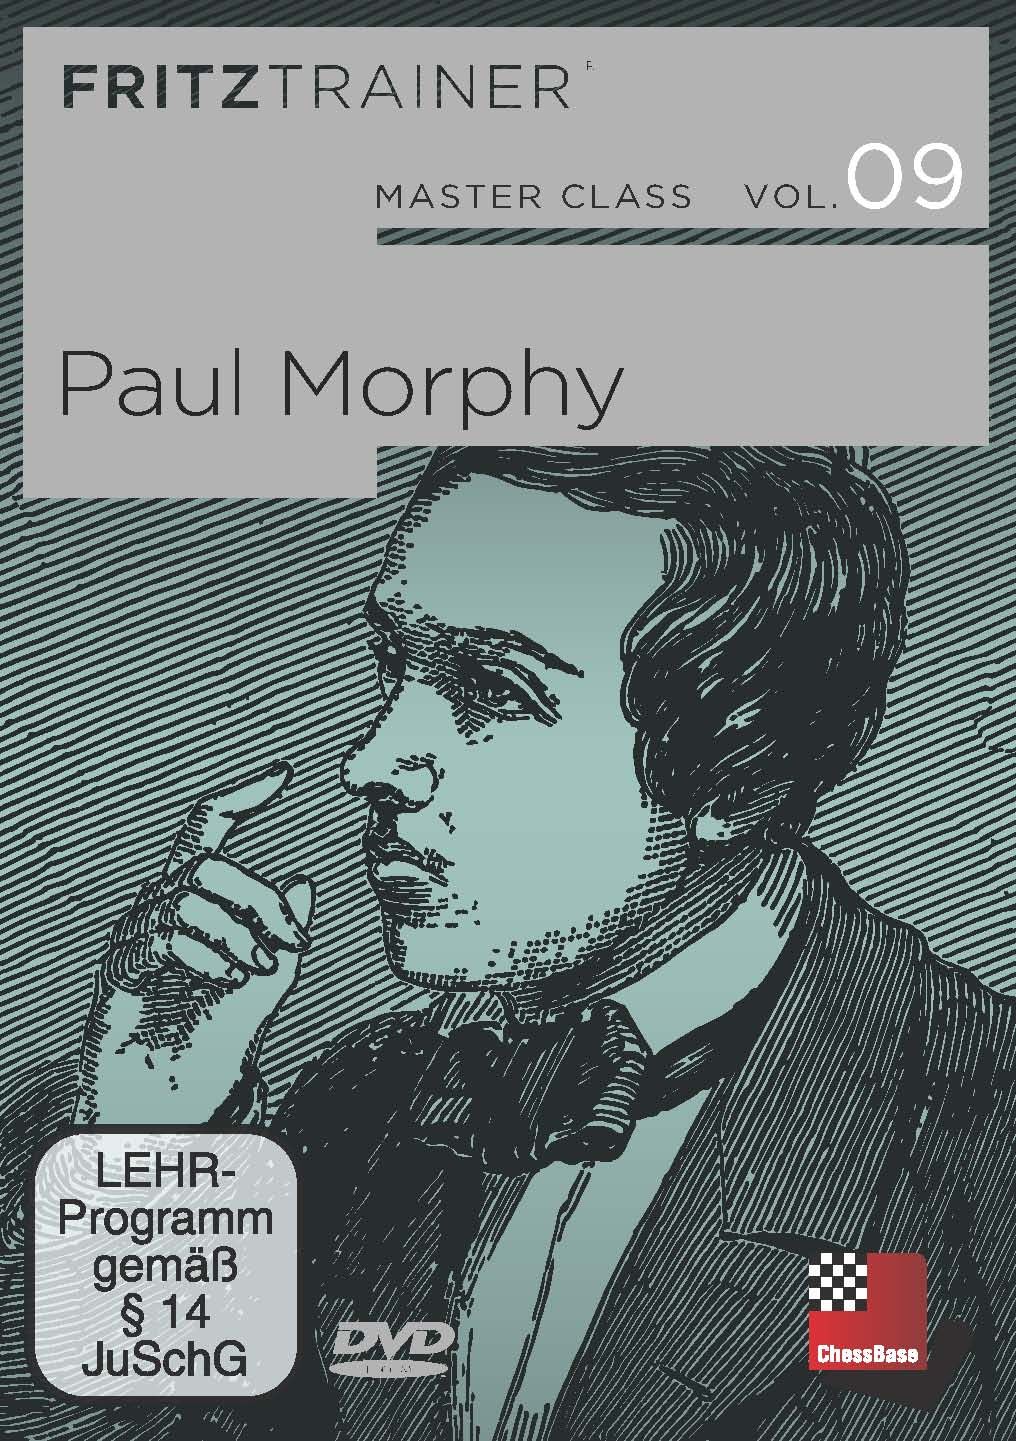 The Original Opera Game: Paul Morphy's Famous Opera House Game - Paris  (1858) 